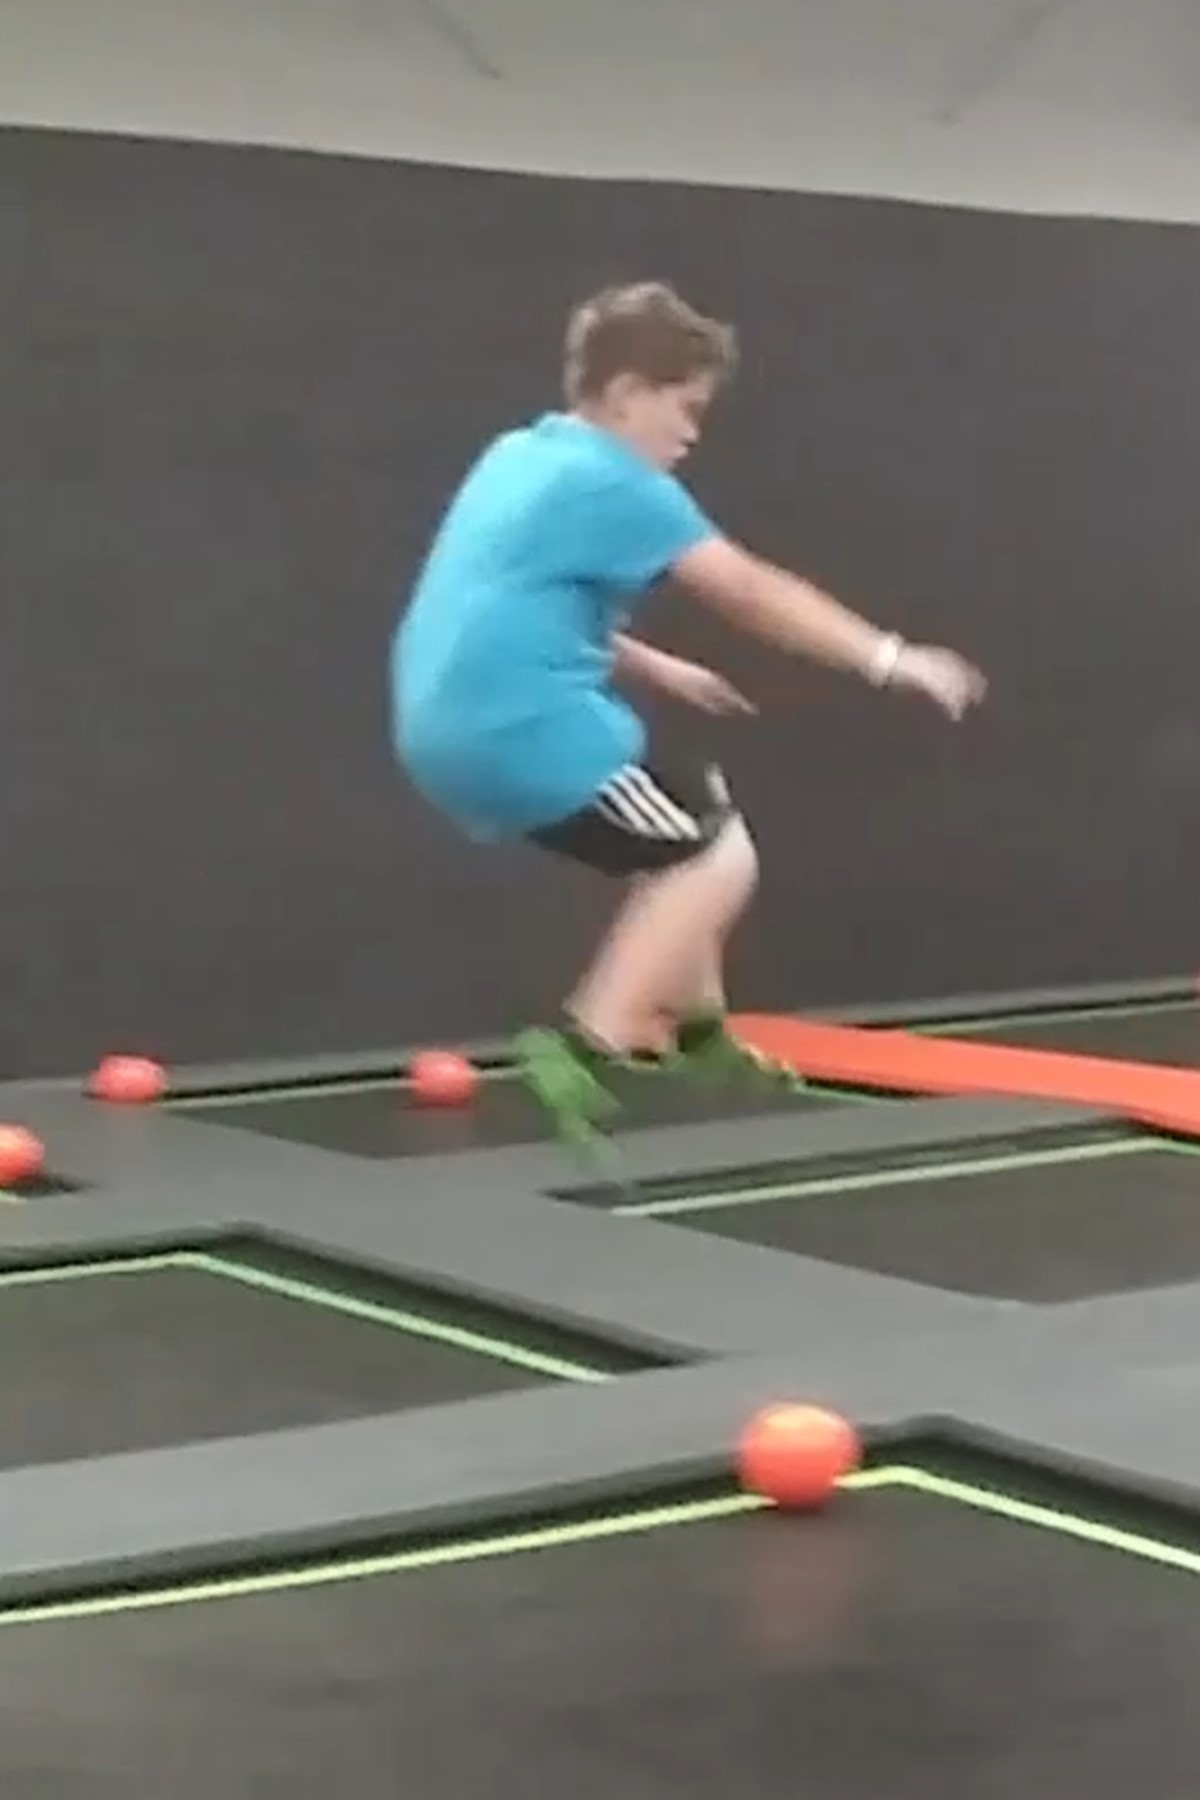 Kid playing dodgeball